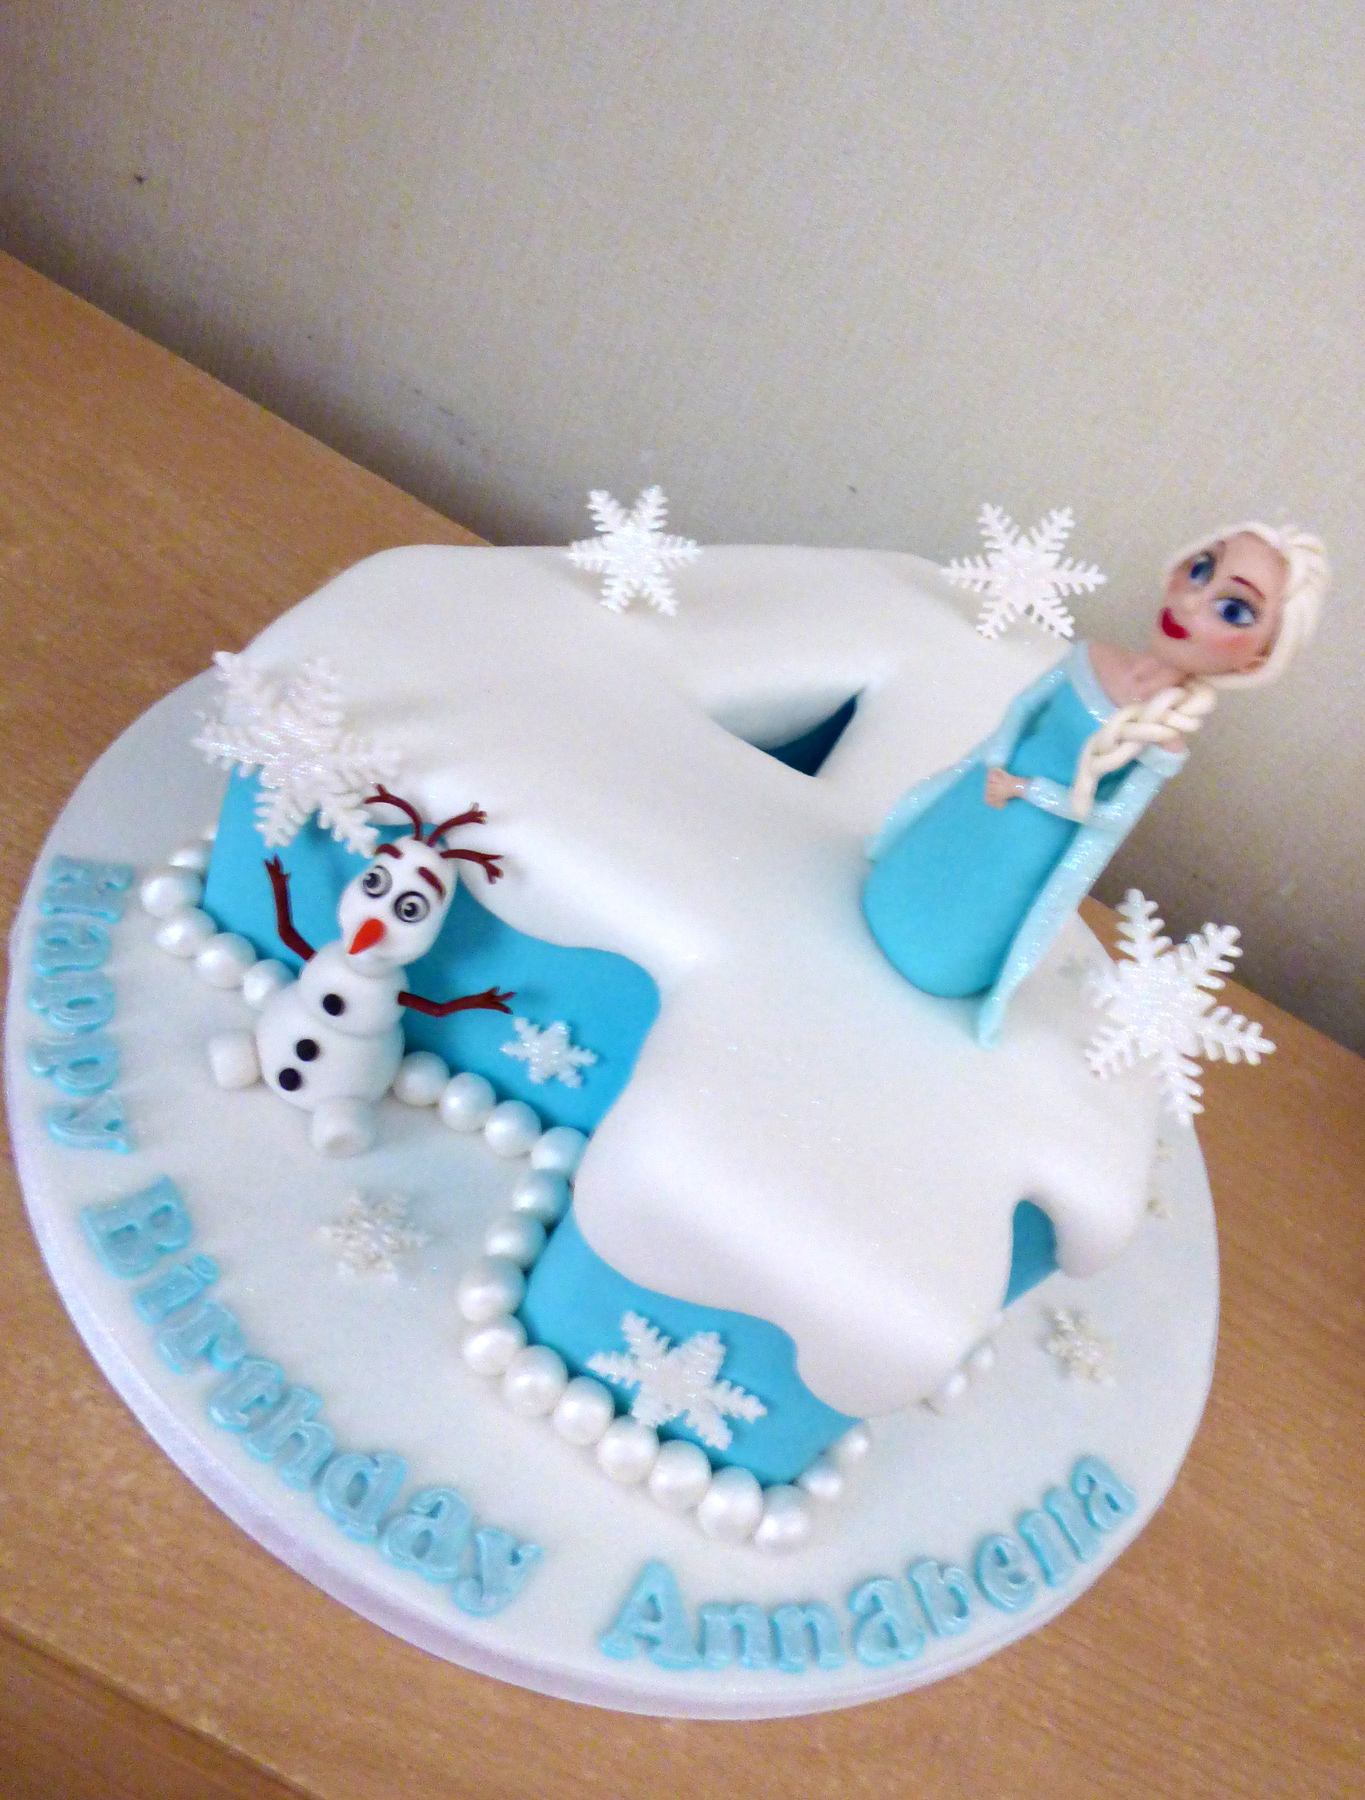 Cake for Birthday, Anniversary (2,3,4 pound) - Jiotaz online store